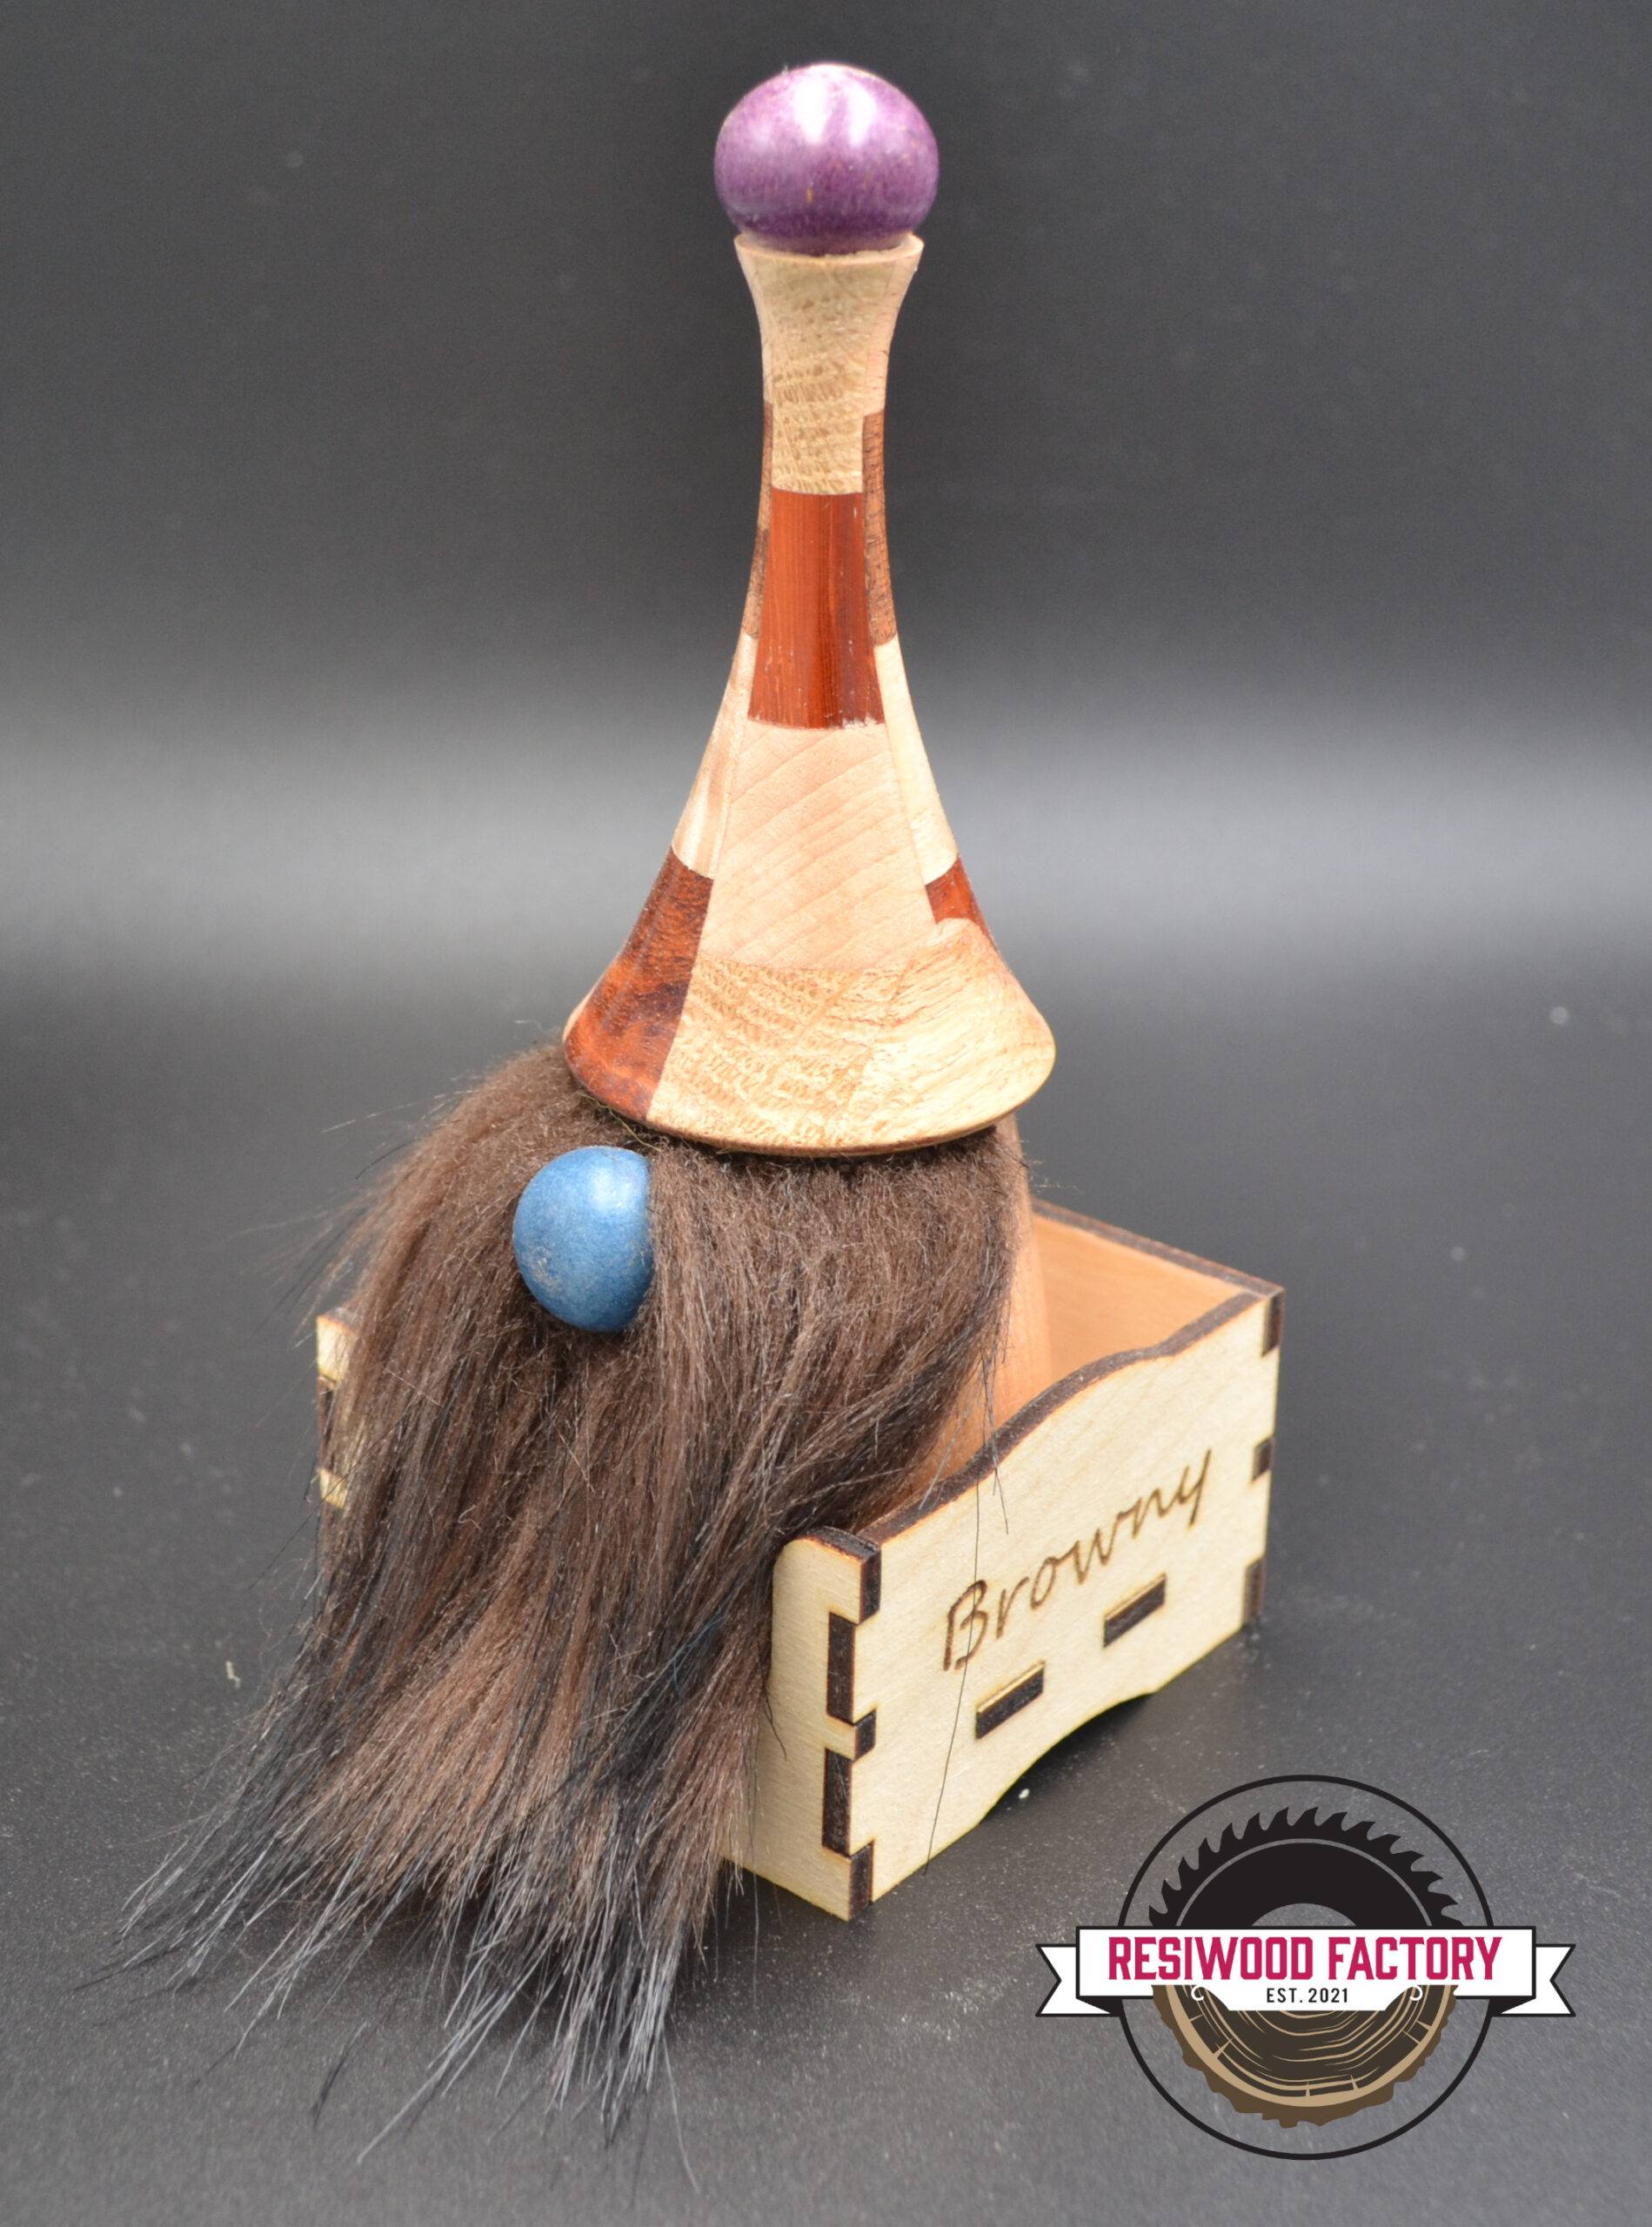 "Nisses" nommé Browny (Gnome) en bois